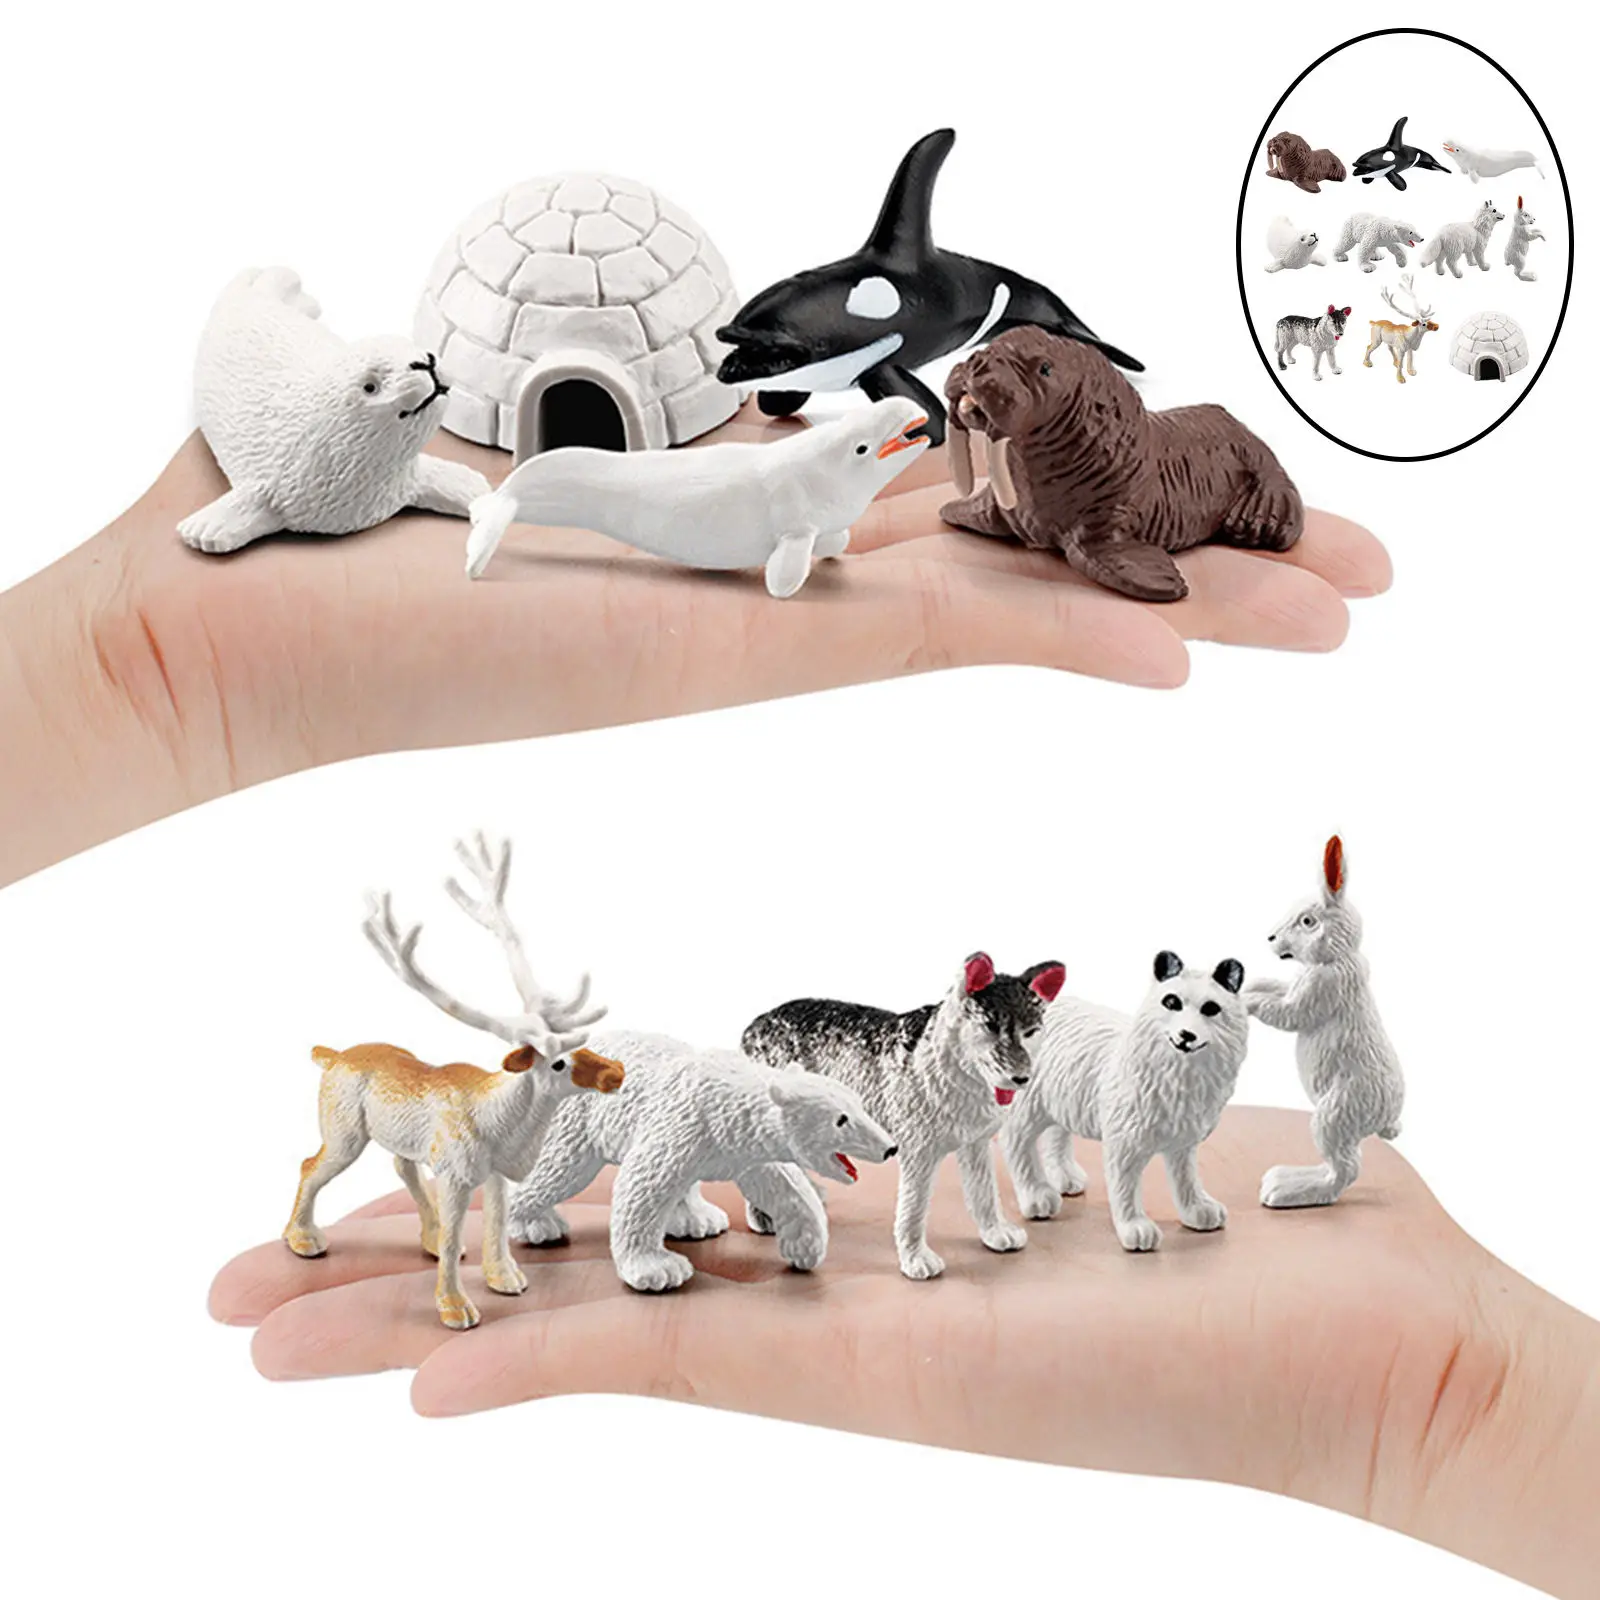 10x Realistic Polar Animal Figurines Miniature Statues Toys for Home Desktop Decor Kids Gift